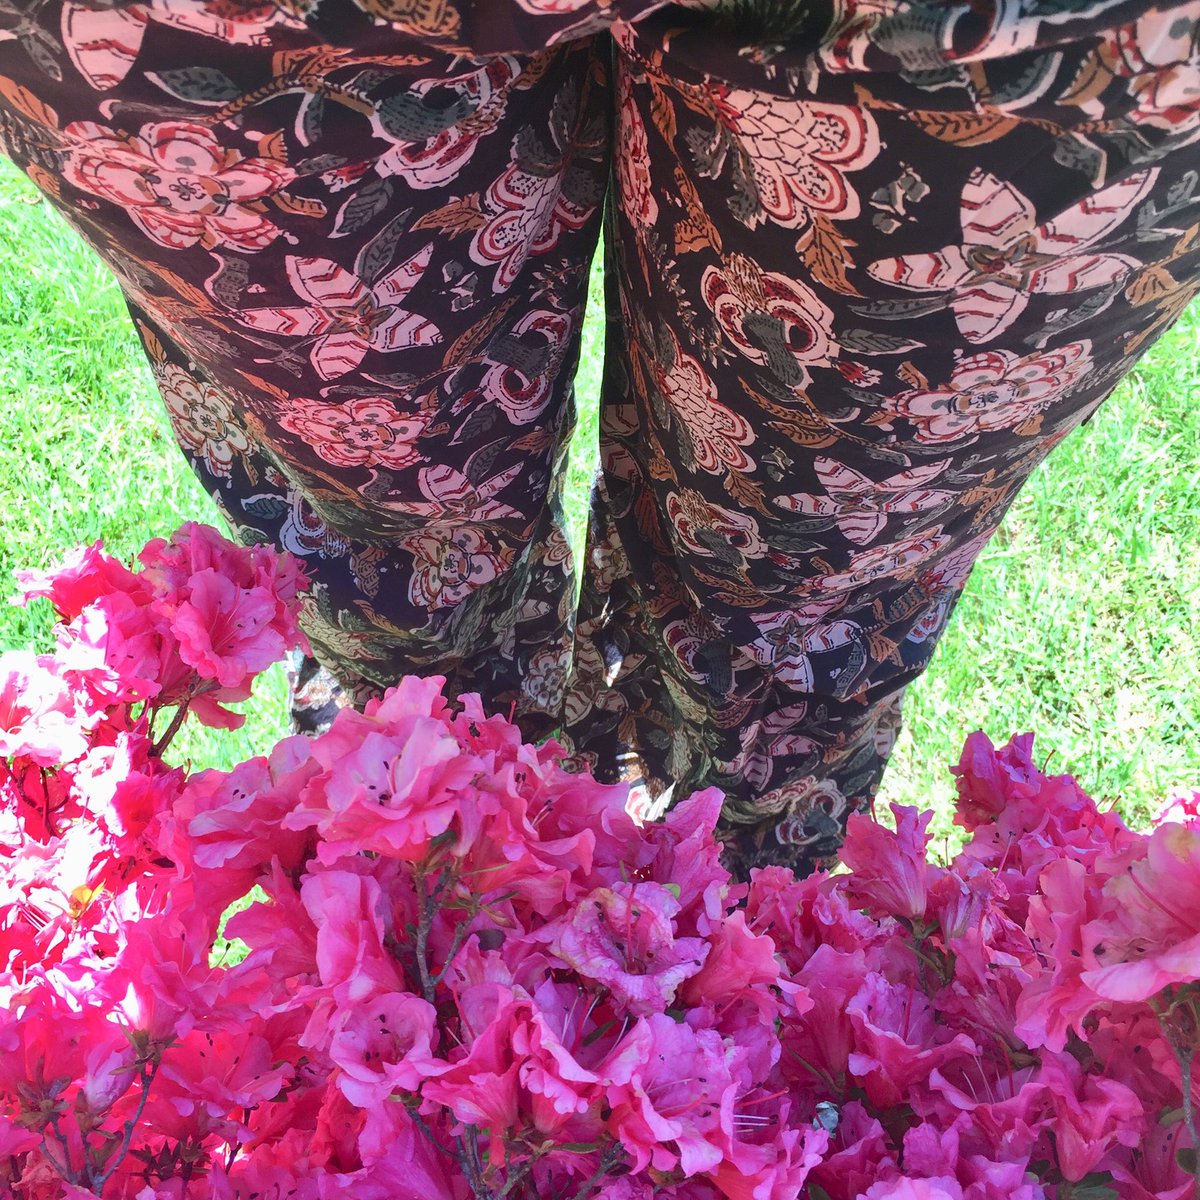 Blossoms, sunny days and cool cotton block print trousers @hippydashery 
•
Hippydashery.co.uk
•
 #hippydashery #etsy #sunnydays #newforest #Summer2021 #smallbusiness #alternativedress #bohodress #sustainablefashion #floralclothing #handmade